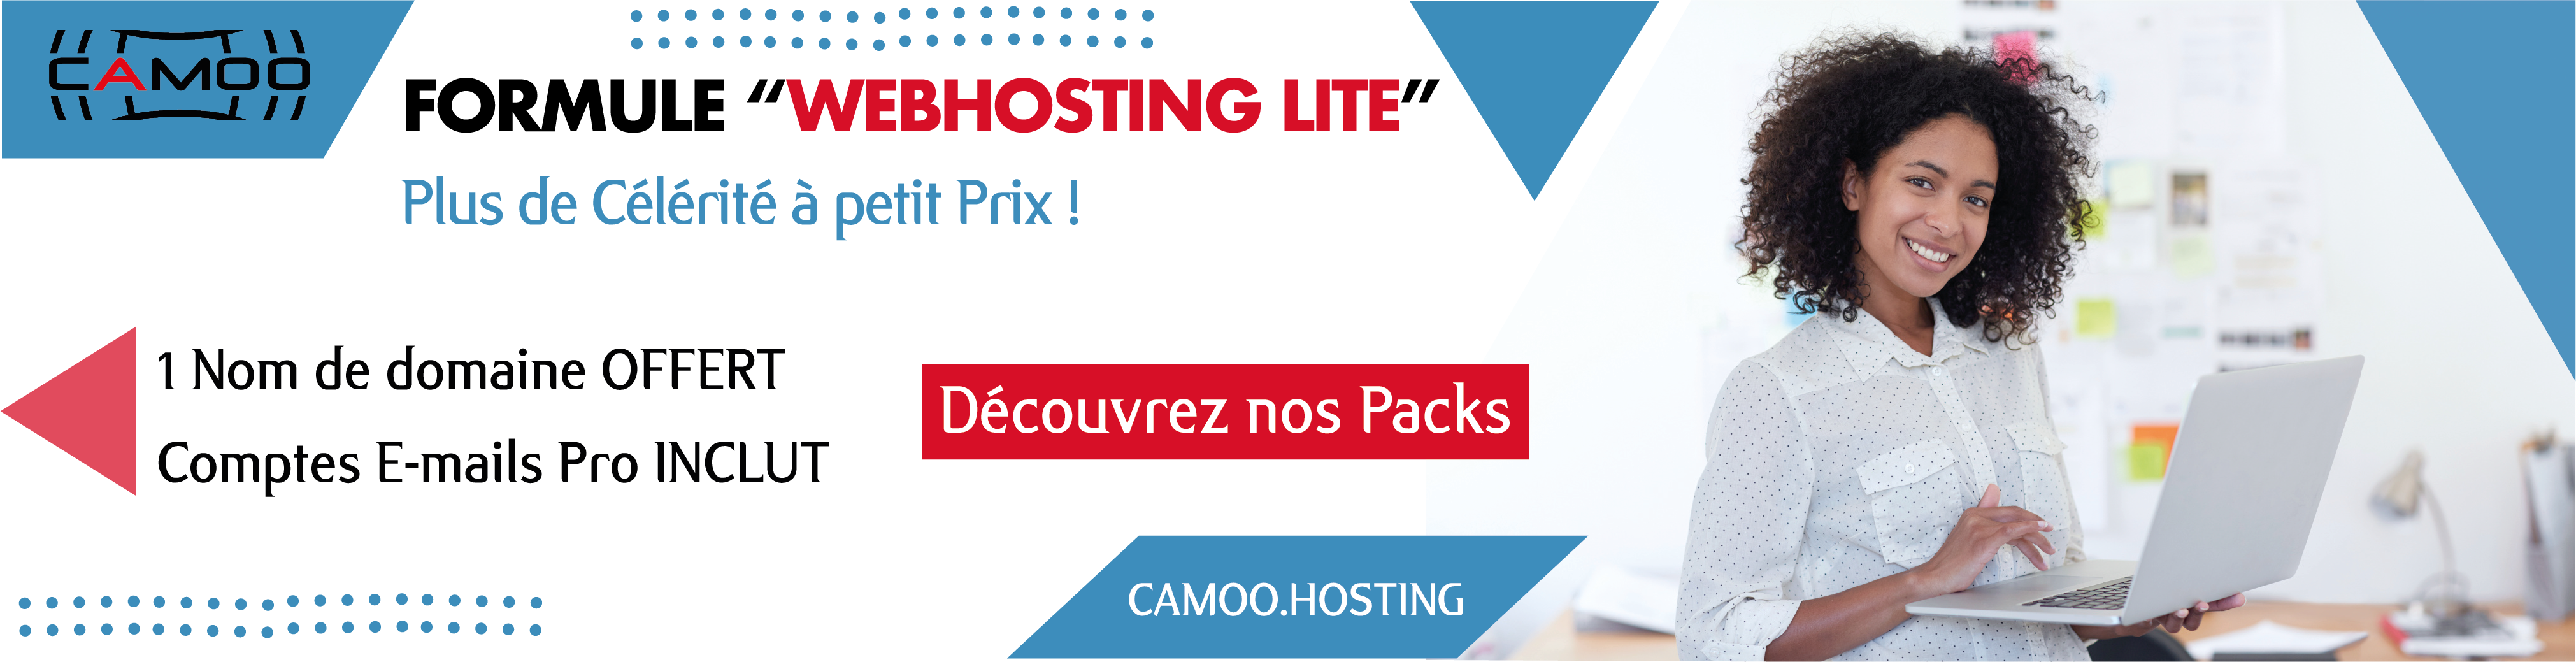 Camoo.hosting Share Web hosting